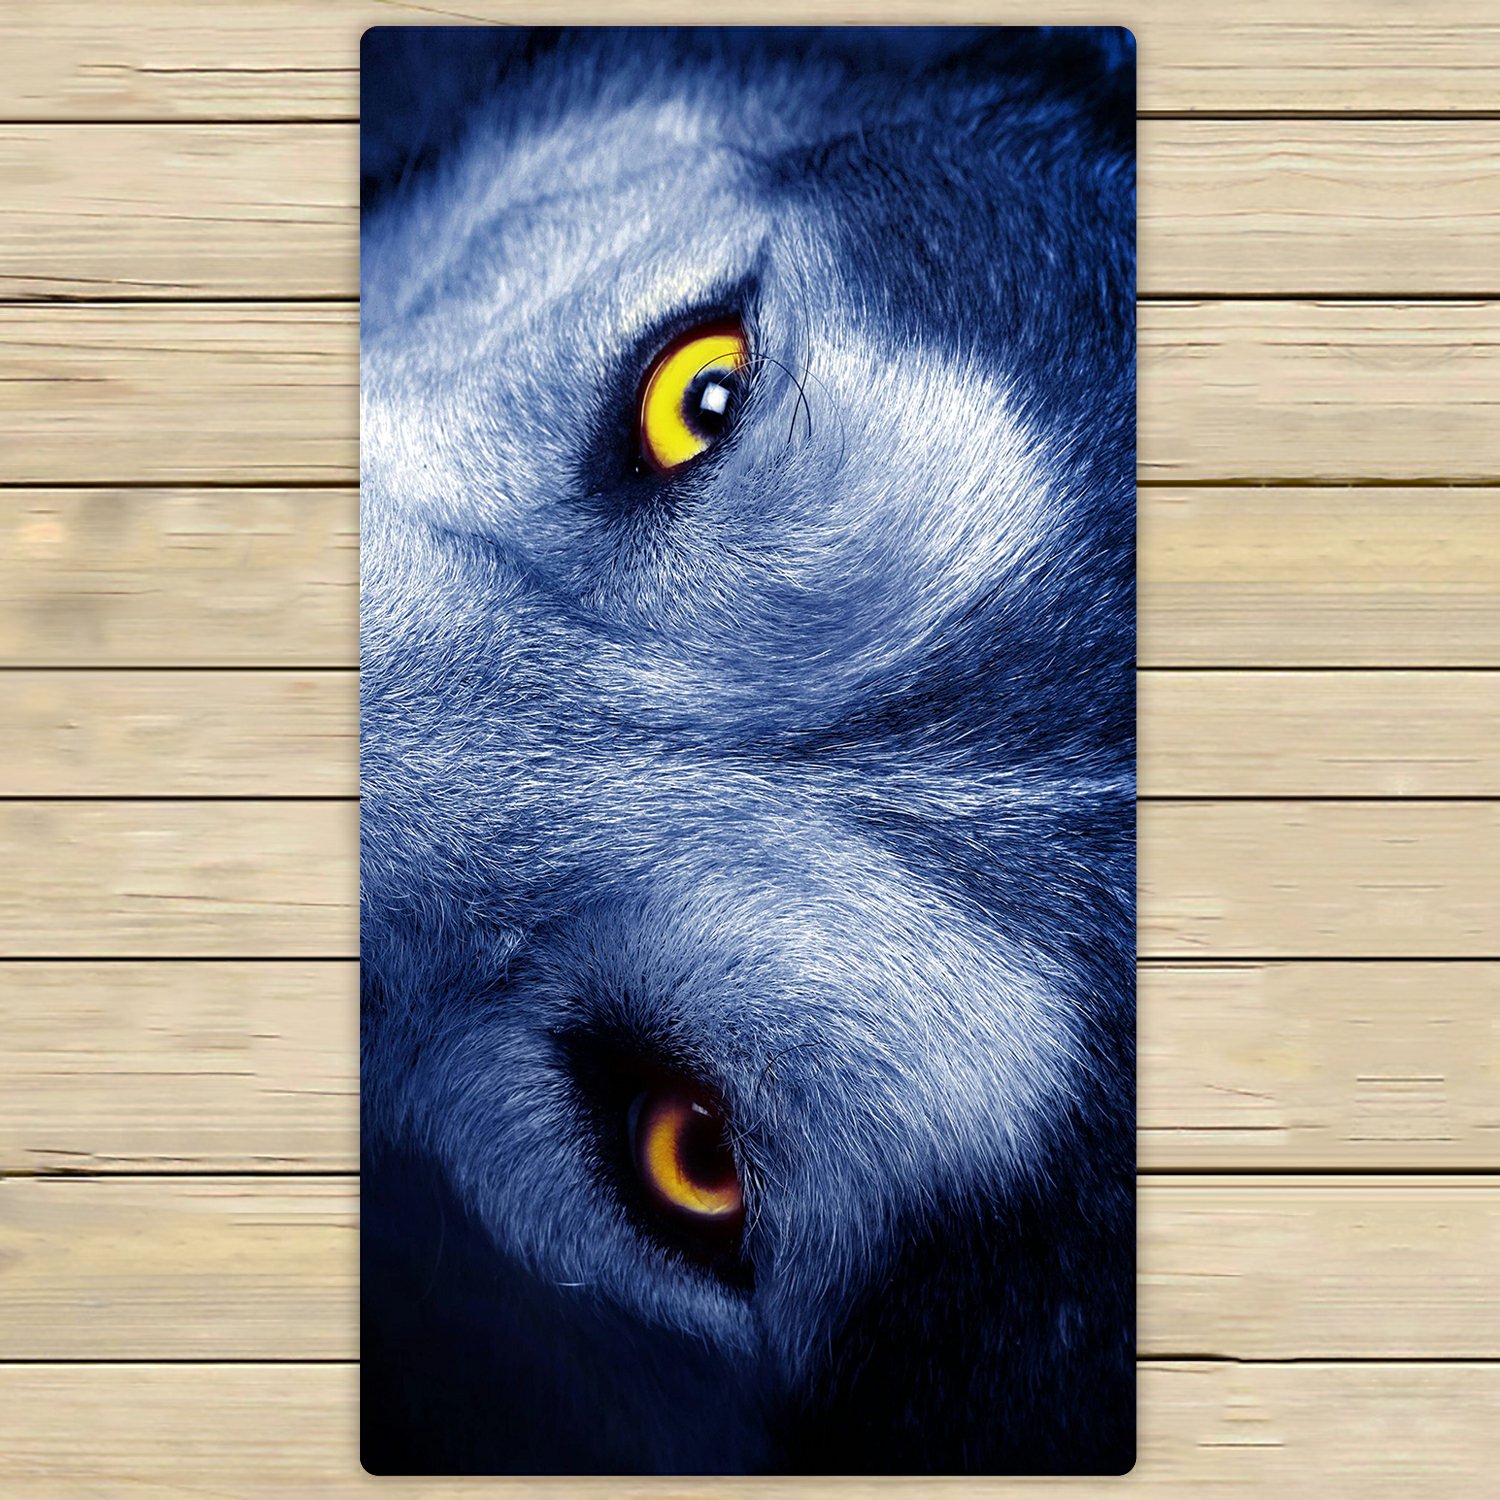 PHFZK Wildlife Animal Towel, Beautiful Eyes of Wolf Hand Towel Bath ...